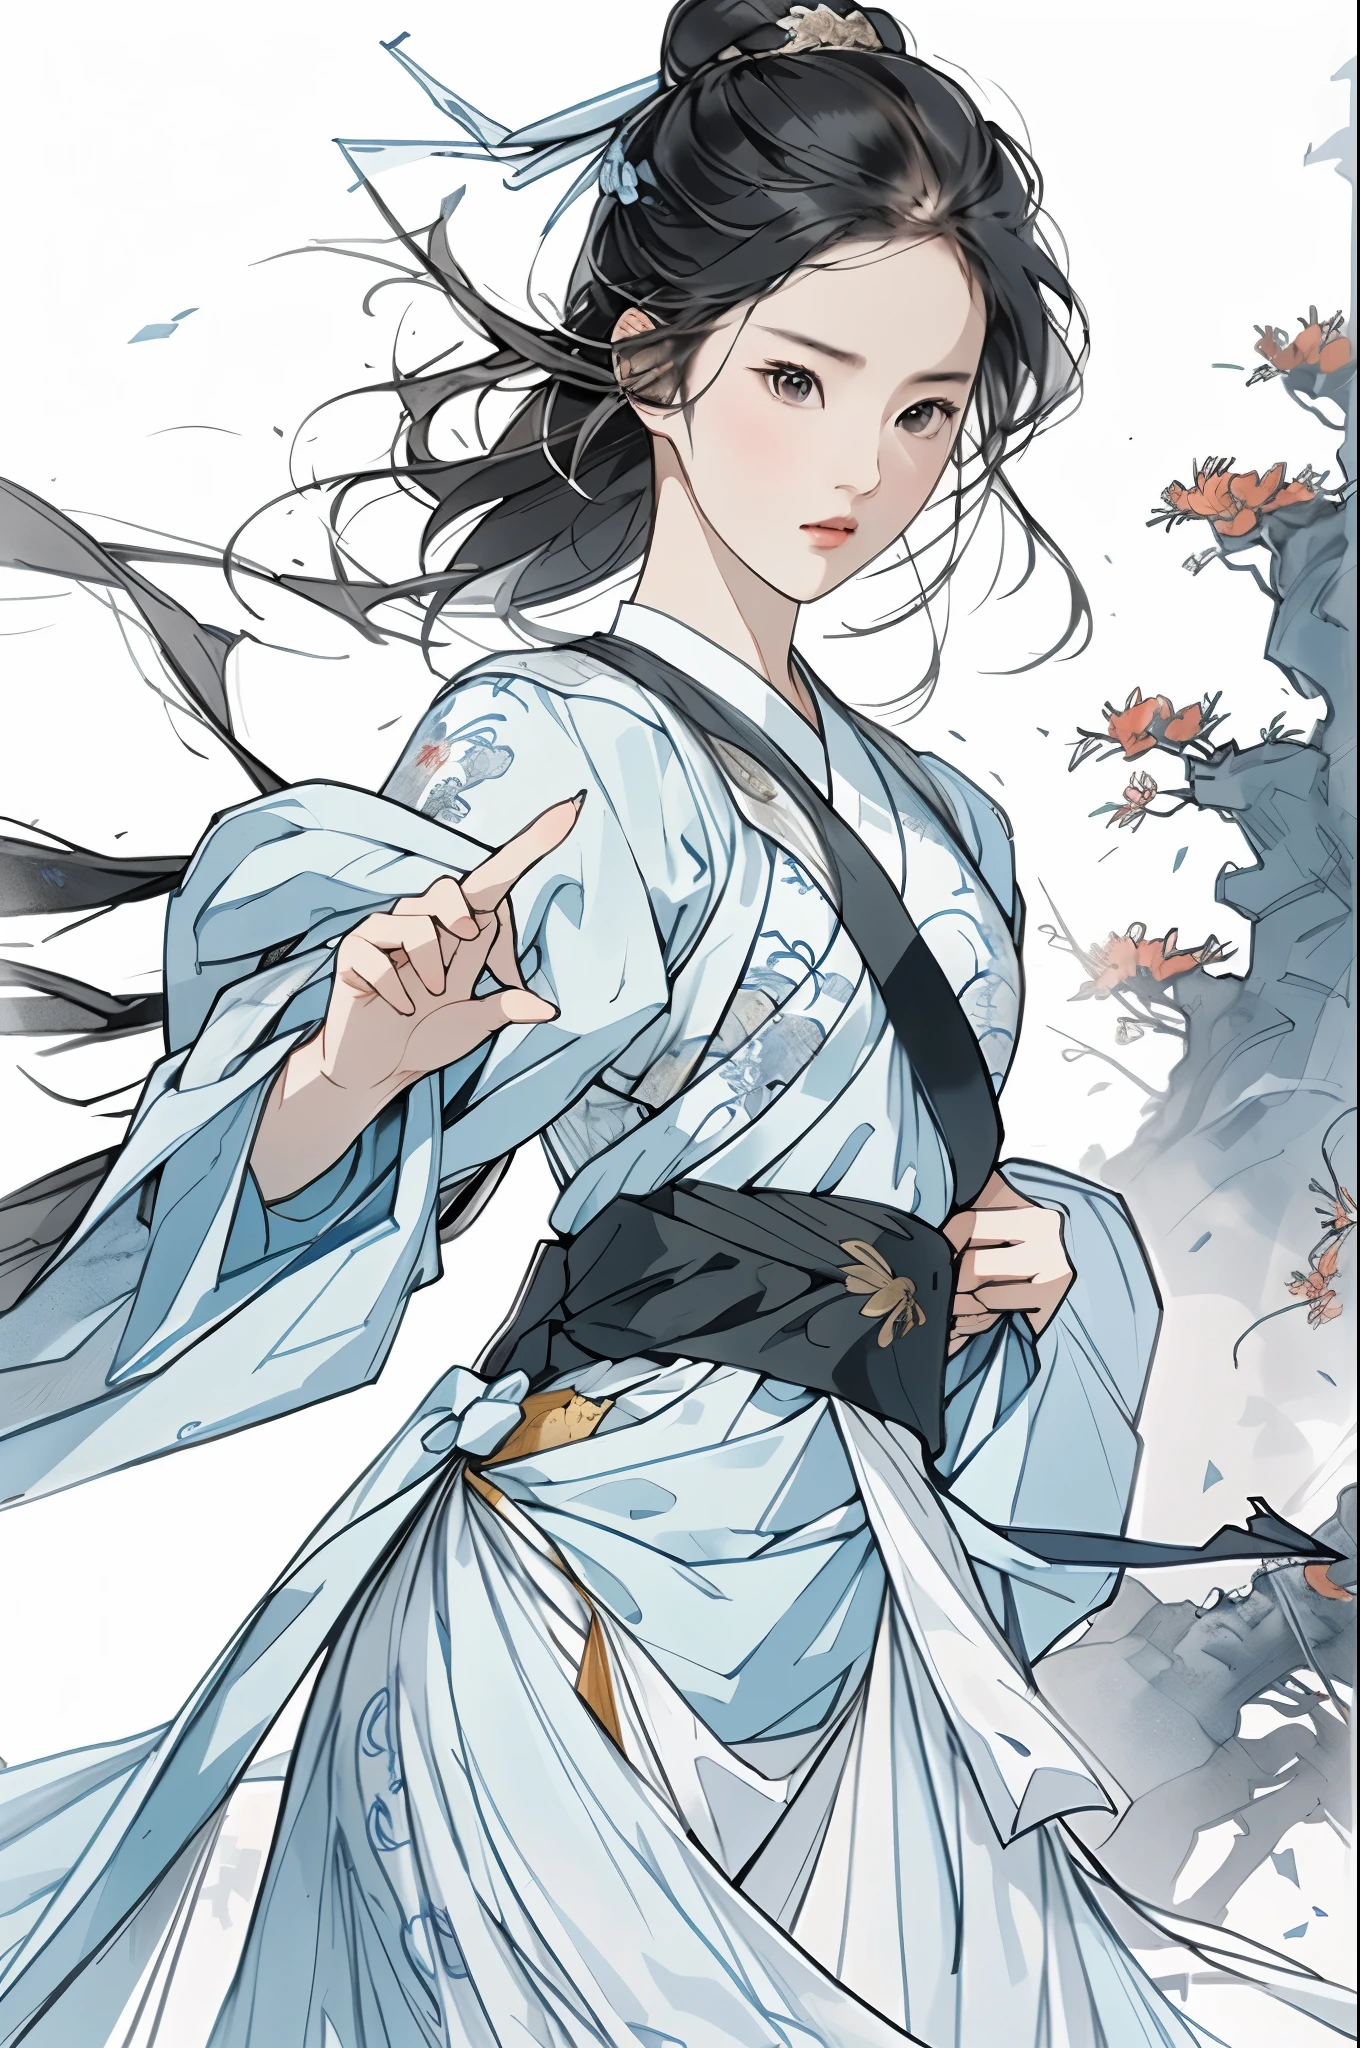 liuyifei, 1 chica, Solo, vestido tradicional chino, pose de kung fu, fondo sencillo, Fondo blanco, Gongbihua